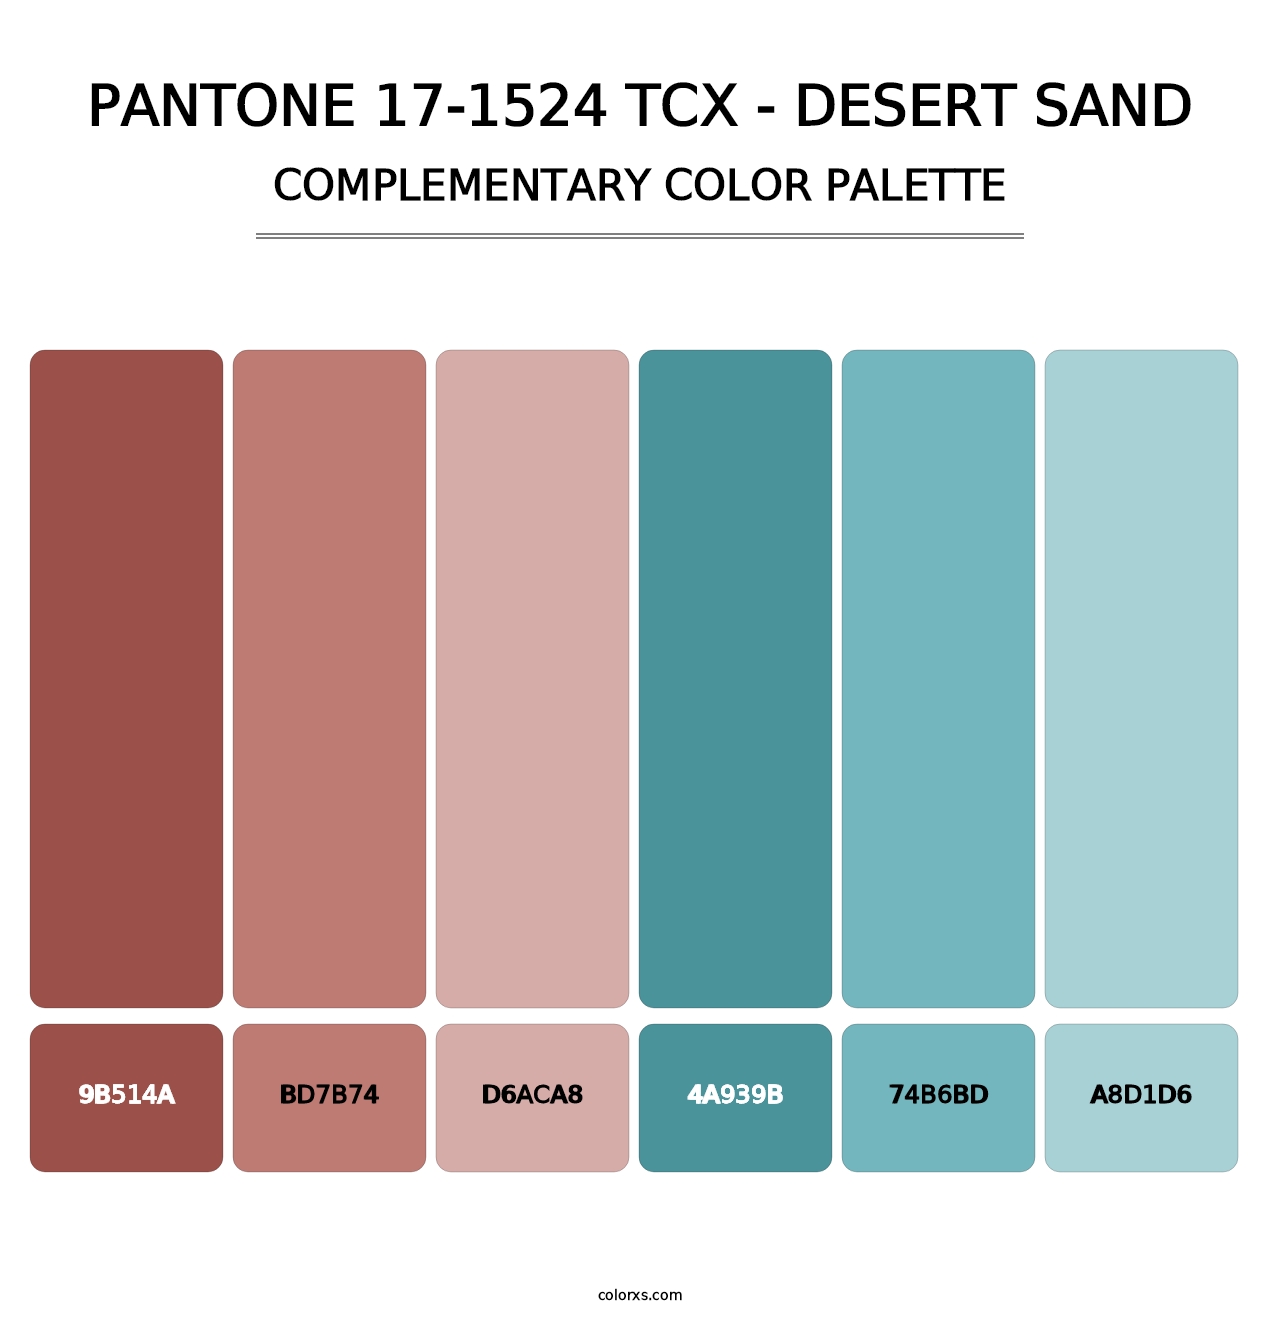 PANTONE 17-1524 TCX - Desert Sand - Complementary Color Palette